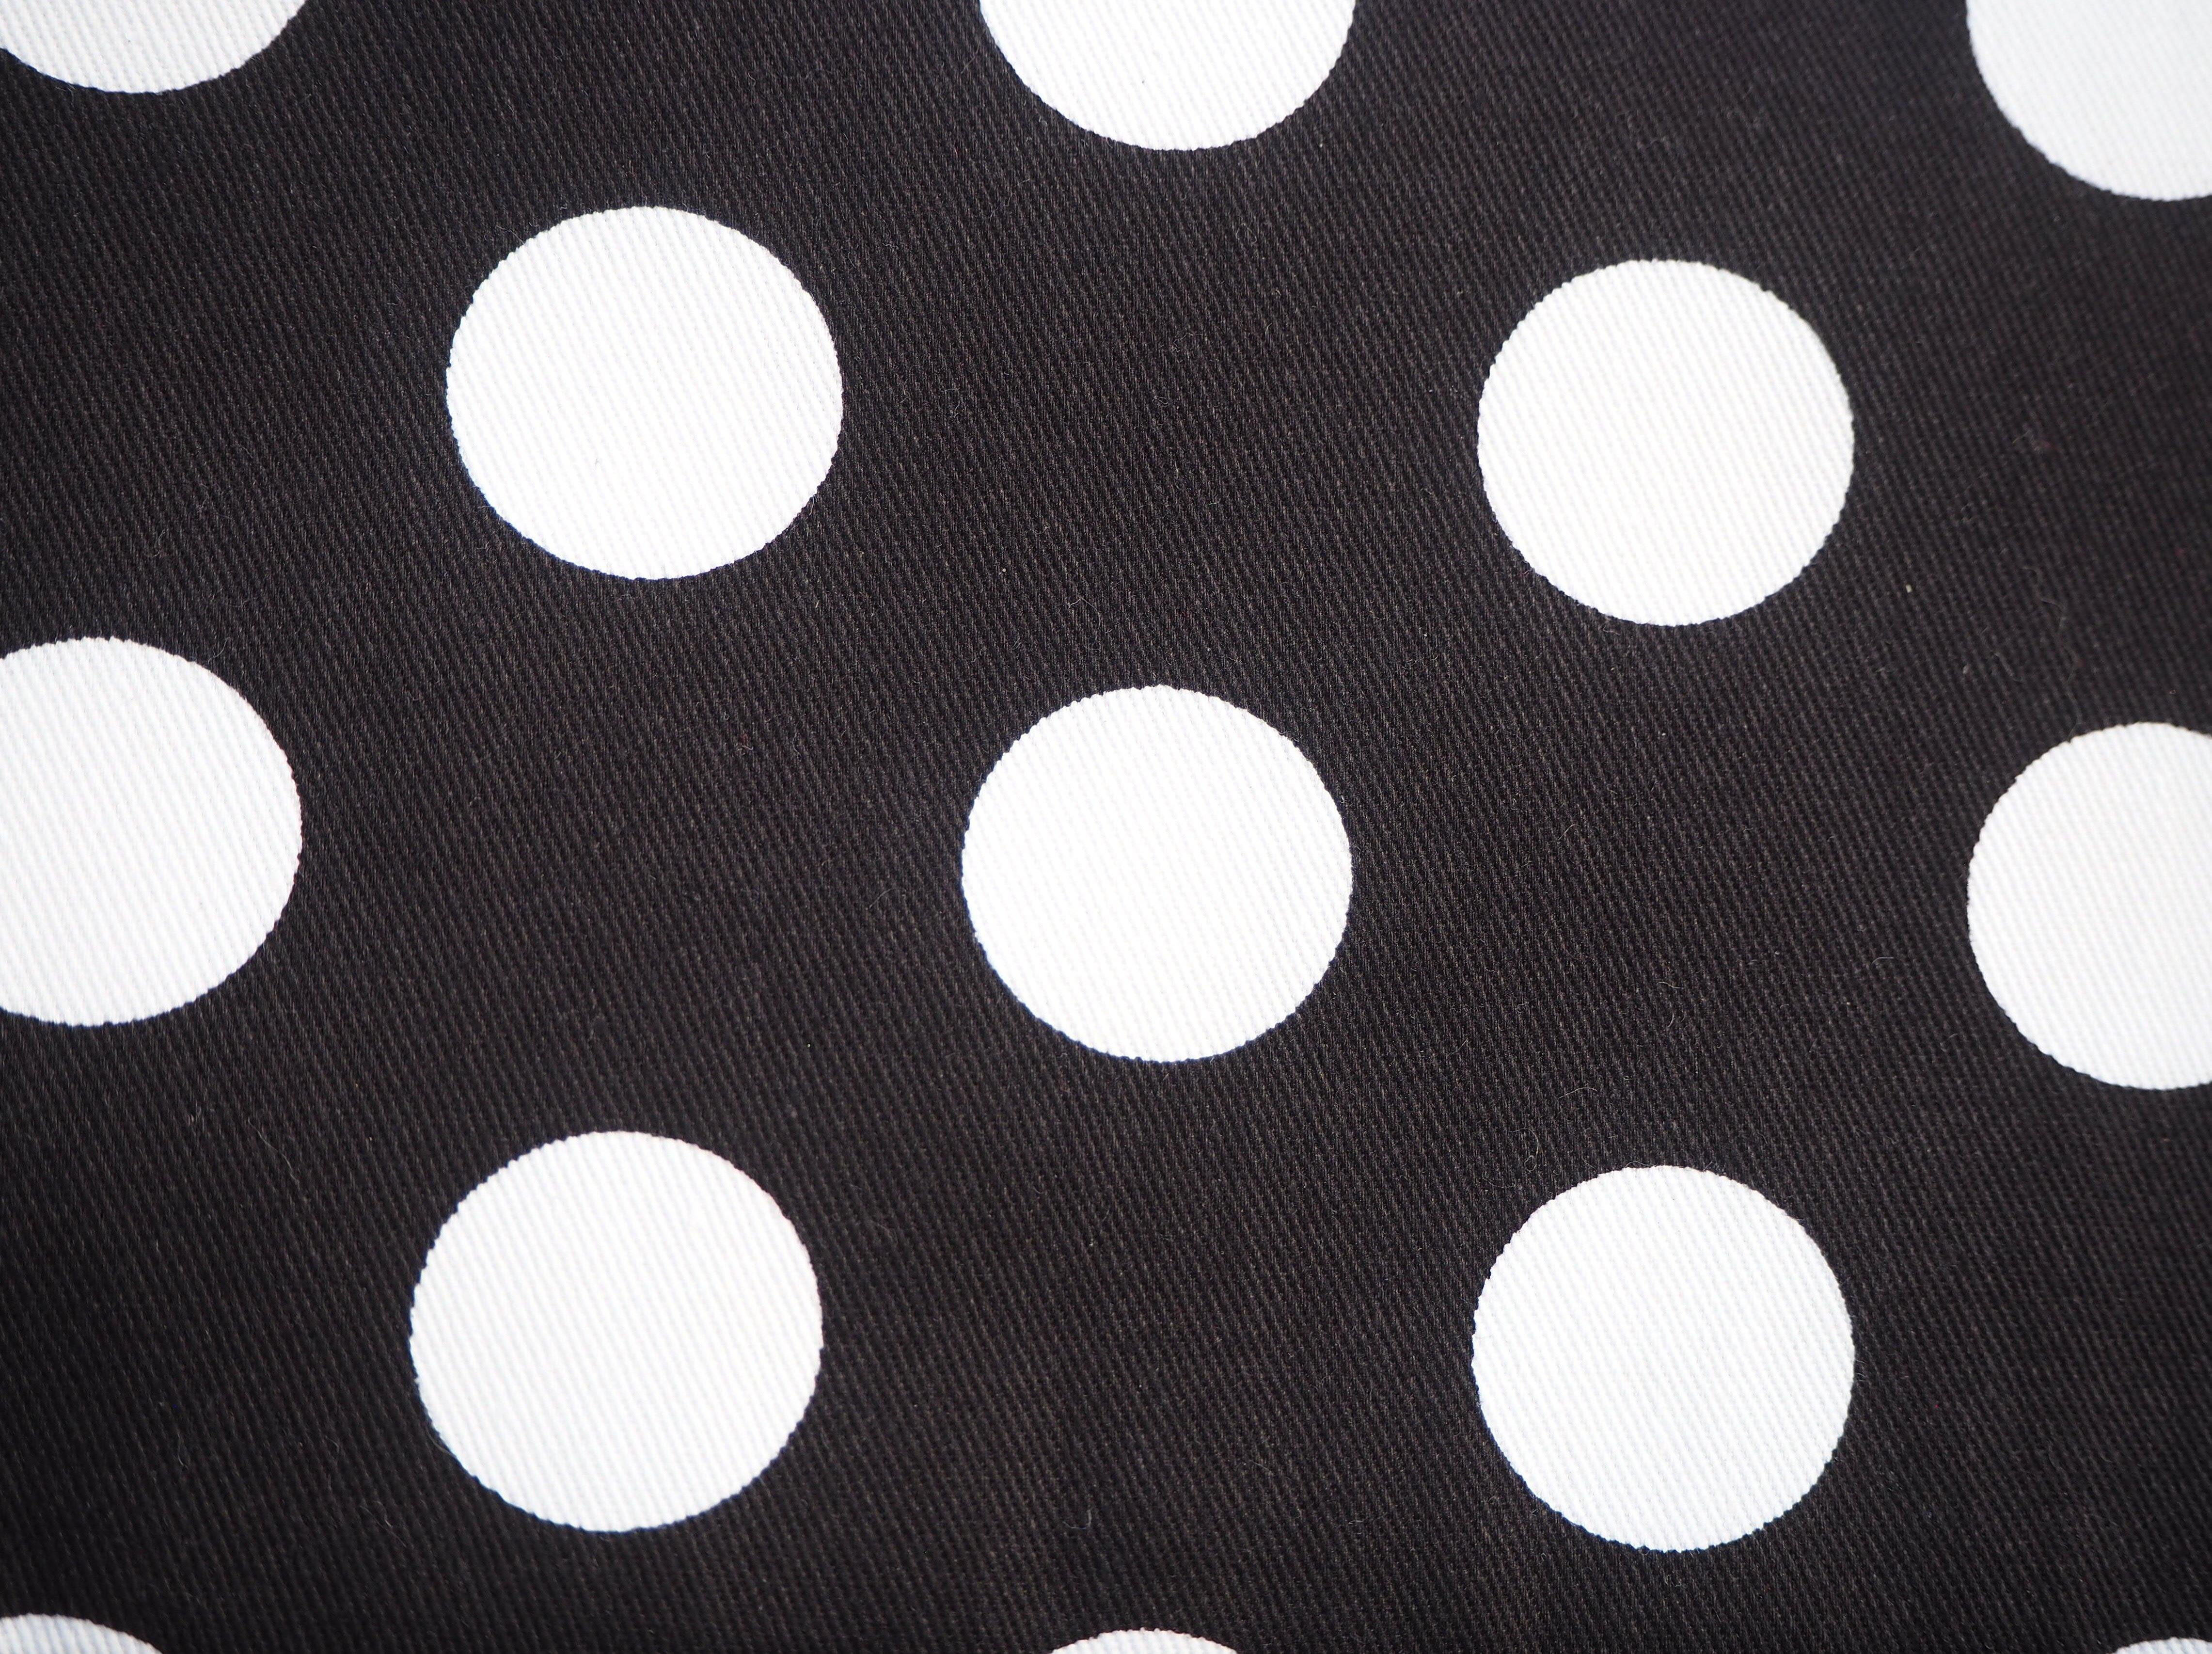 Classic Black & White Polka Dots print, on 100% cotton fabric